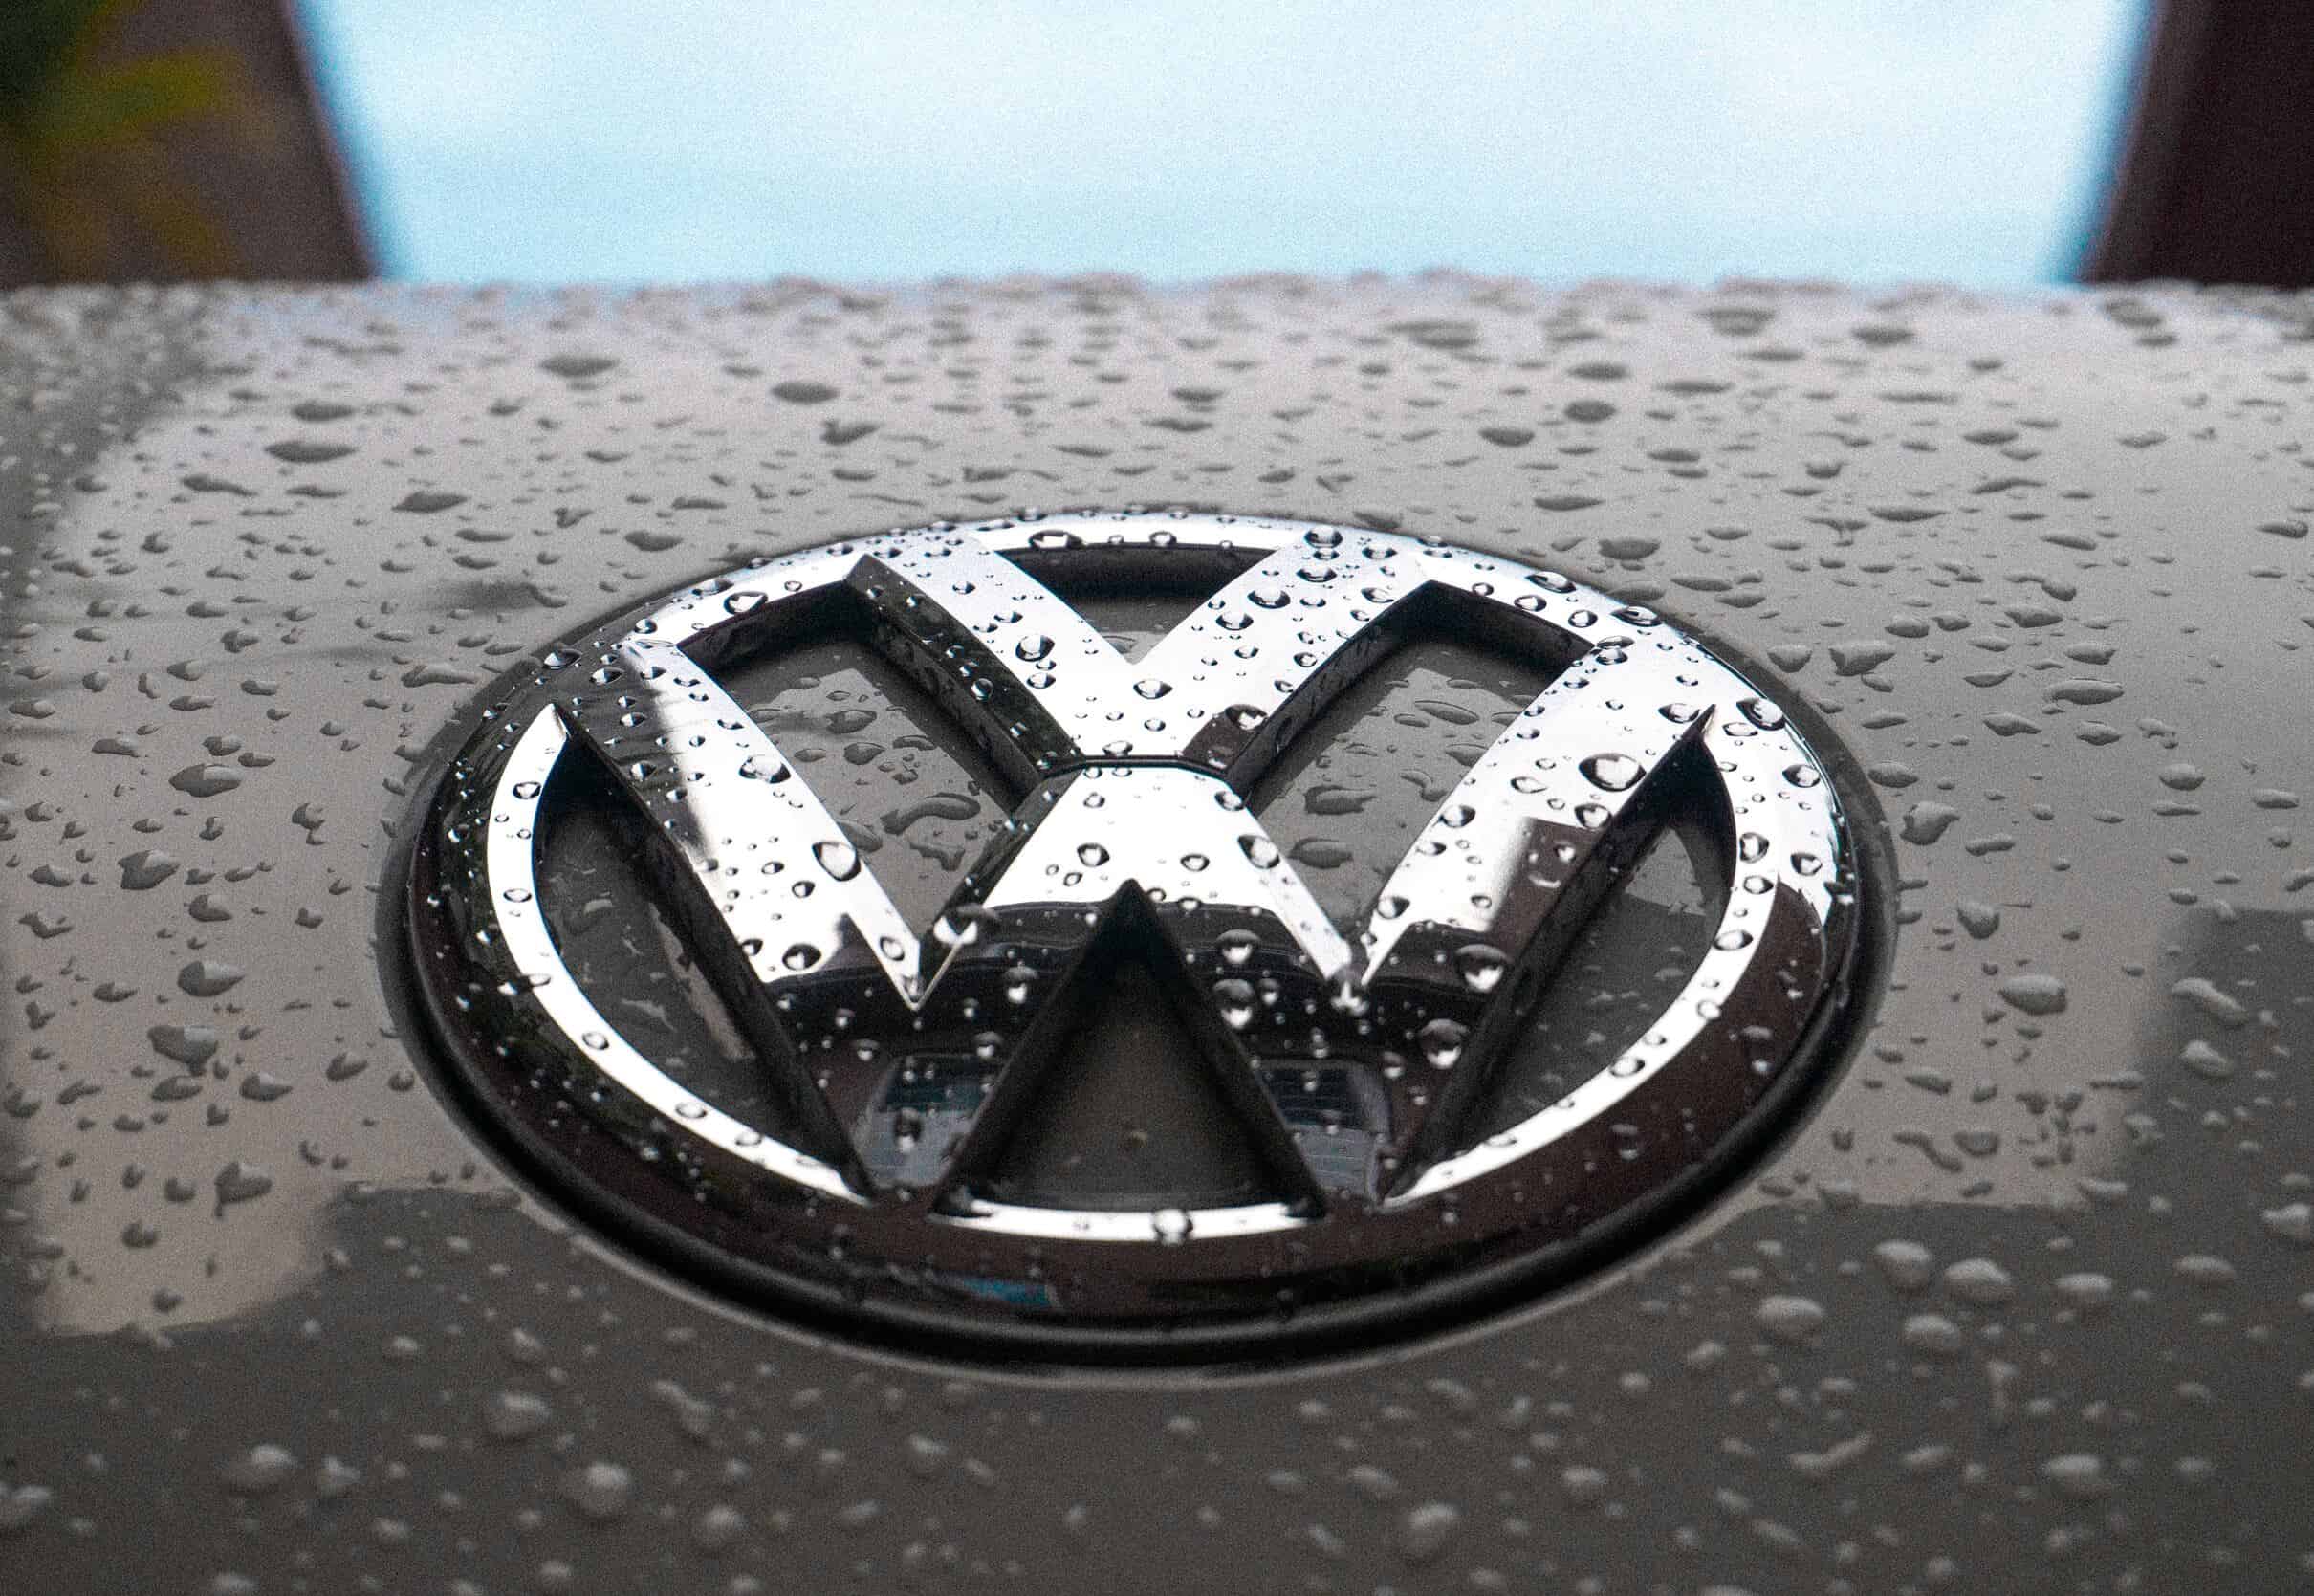 Volkswagen badge - The iconic VW logo.